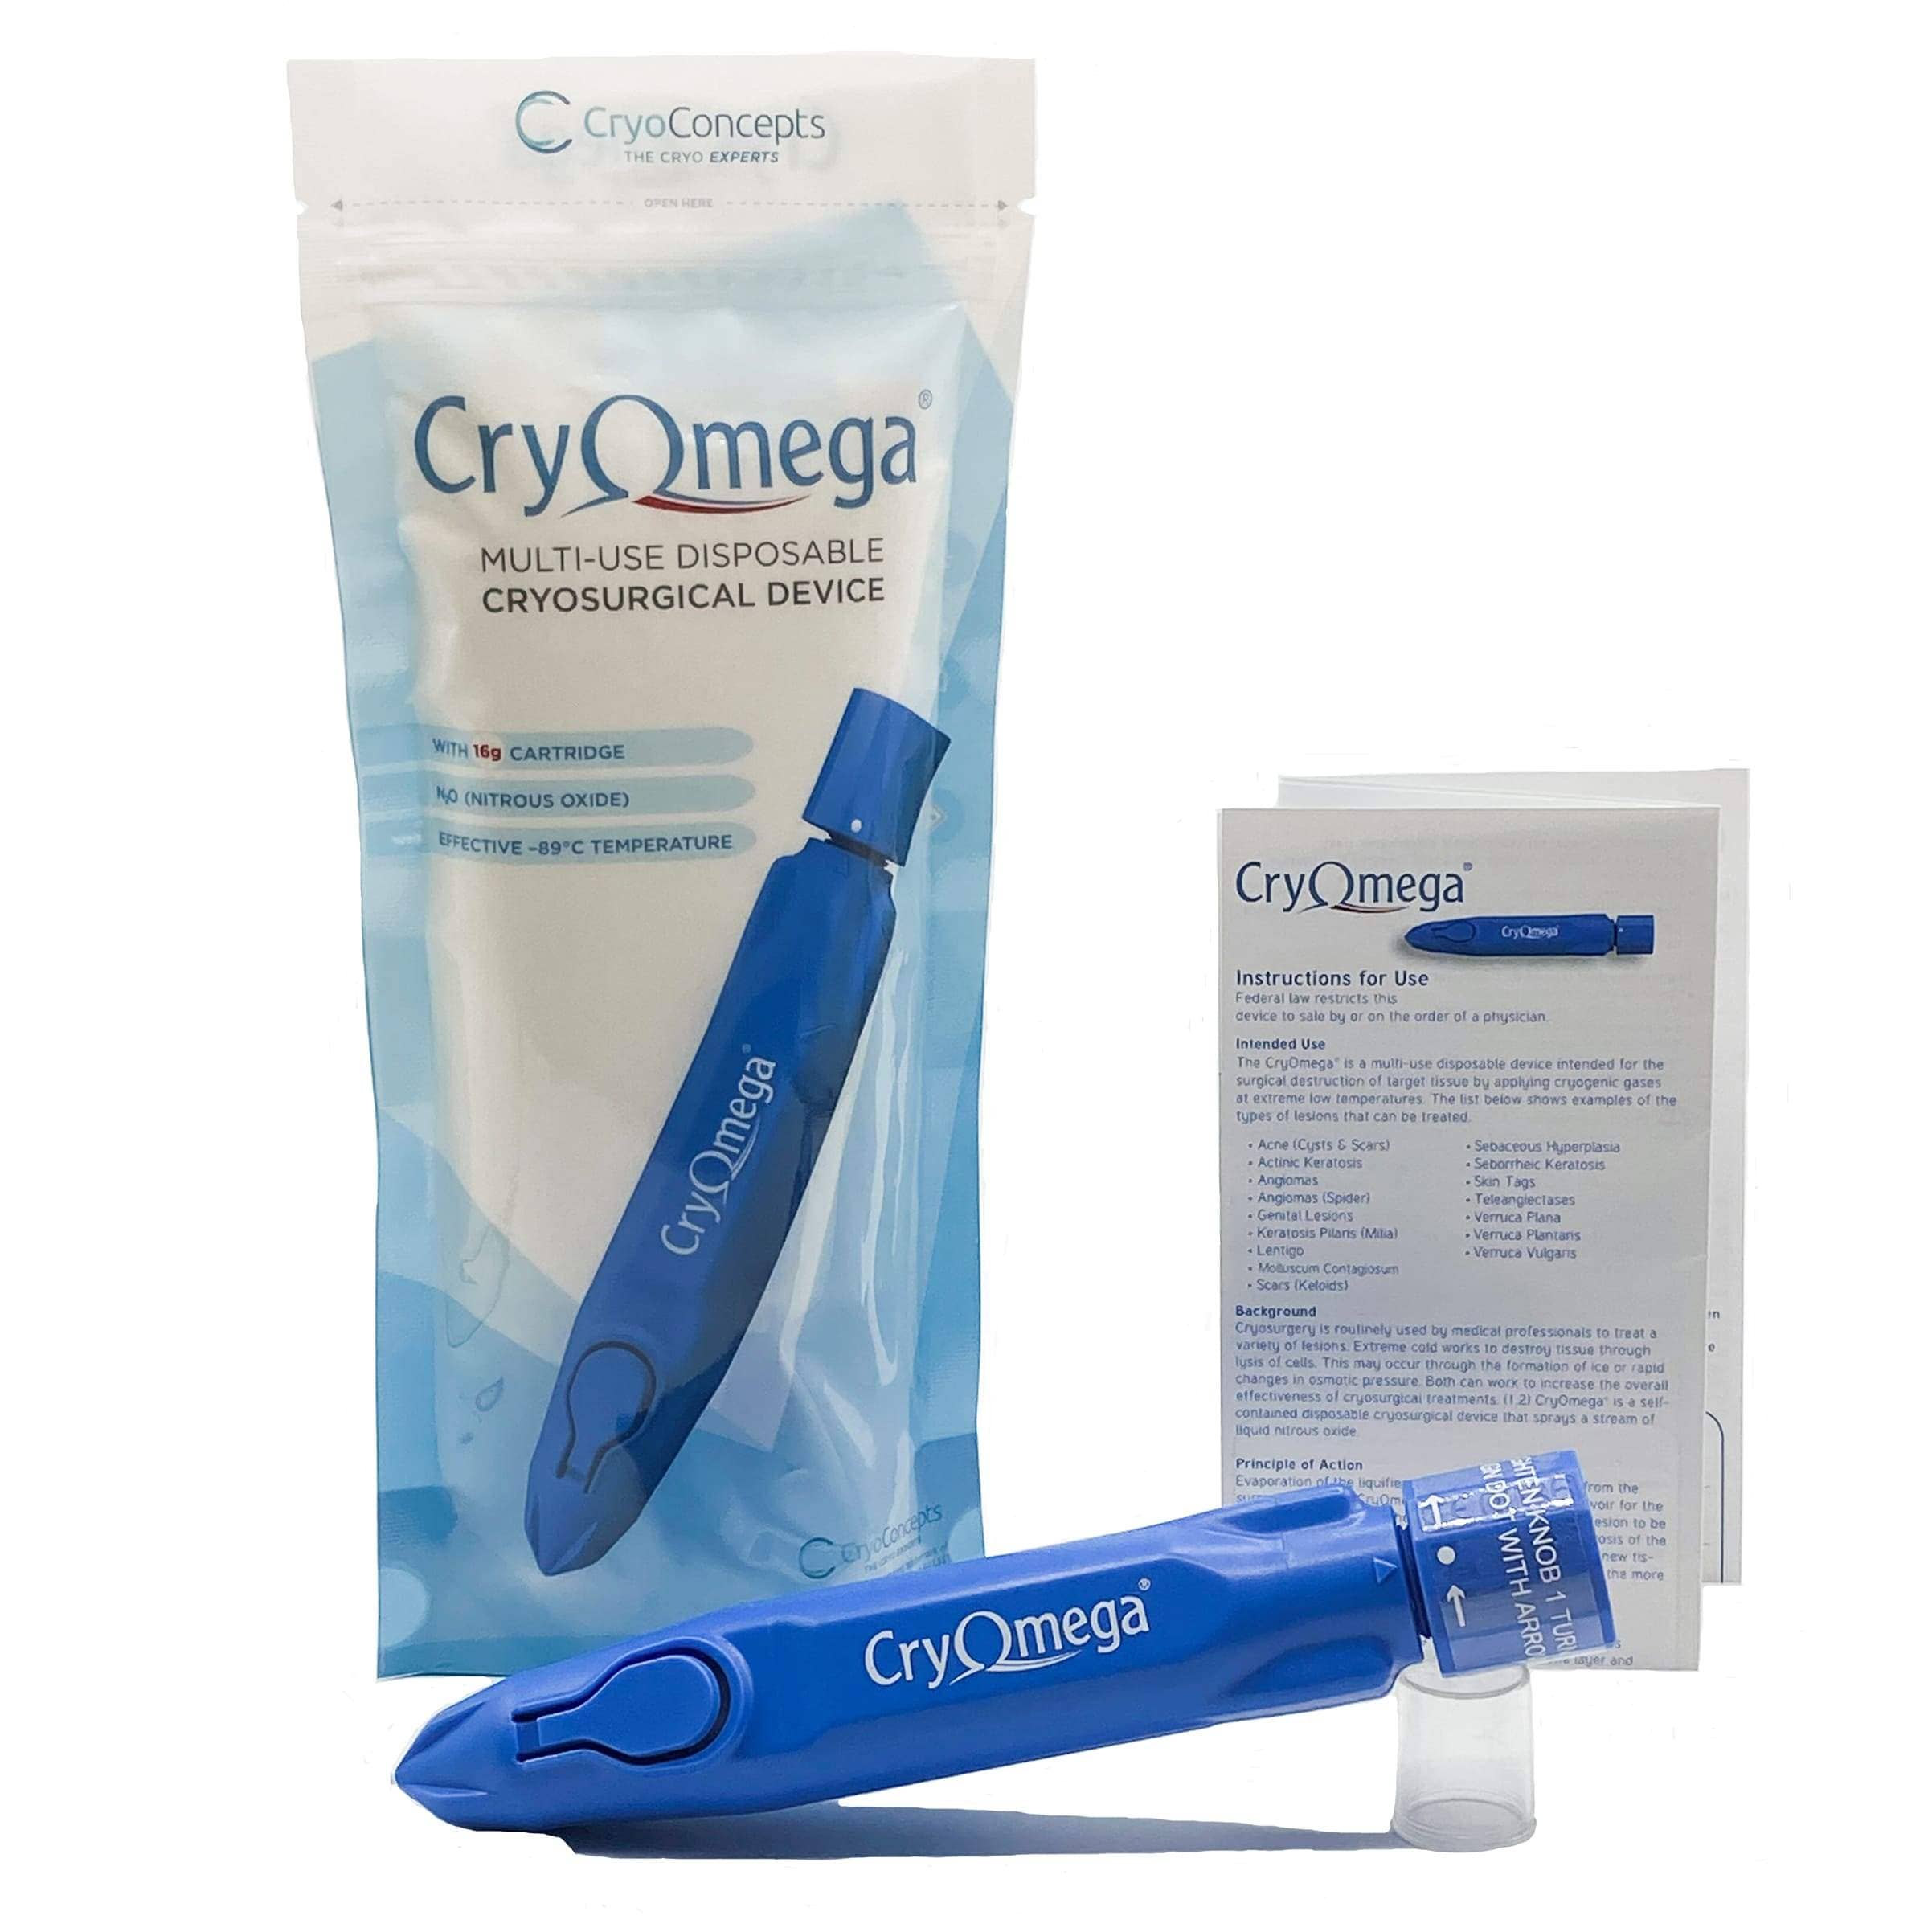 CryoConcepts CryOmega Multi-Use Disposable Cryosurgical Device - Single Pack